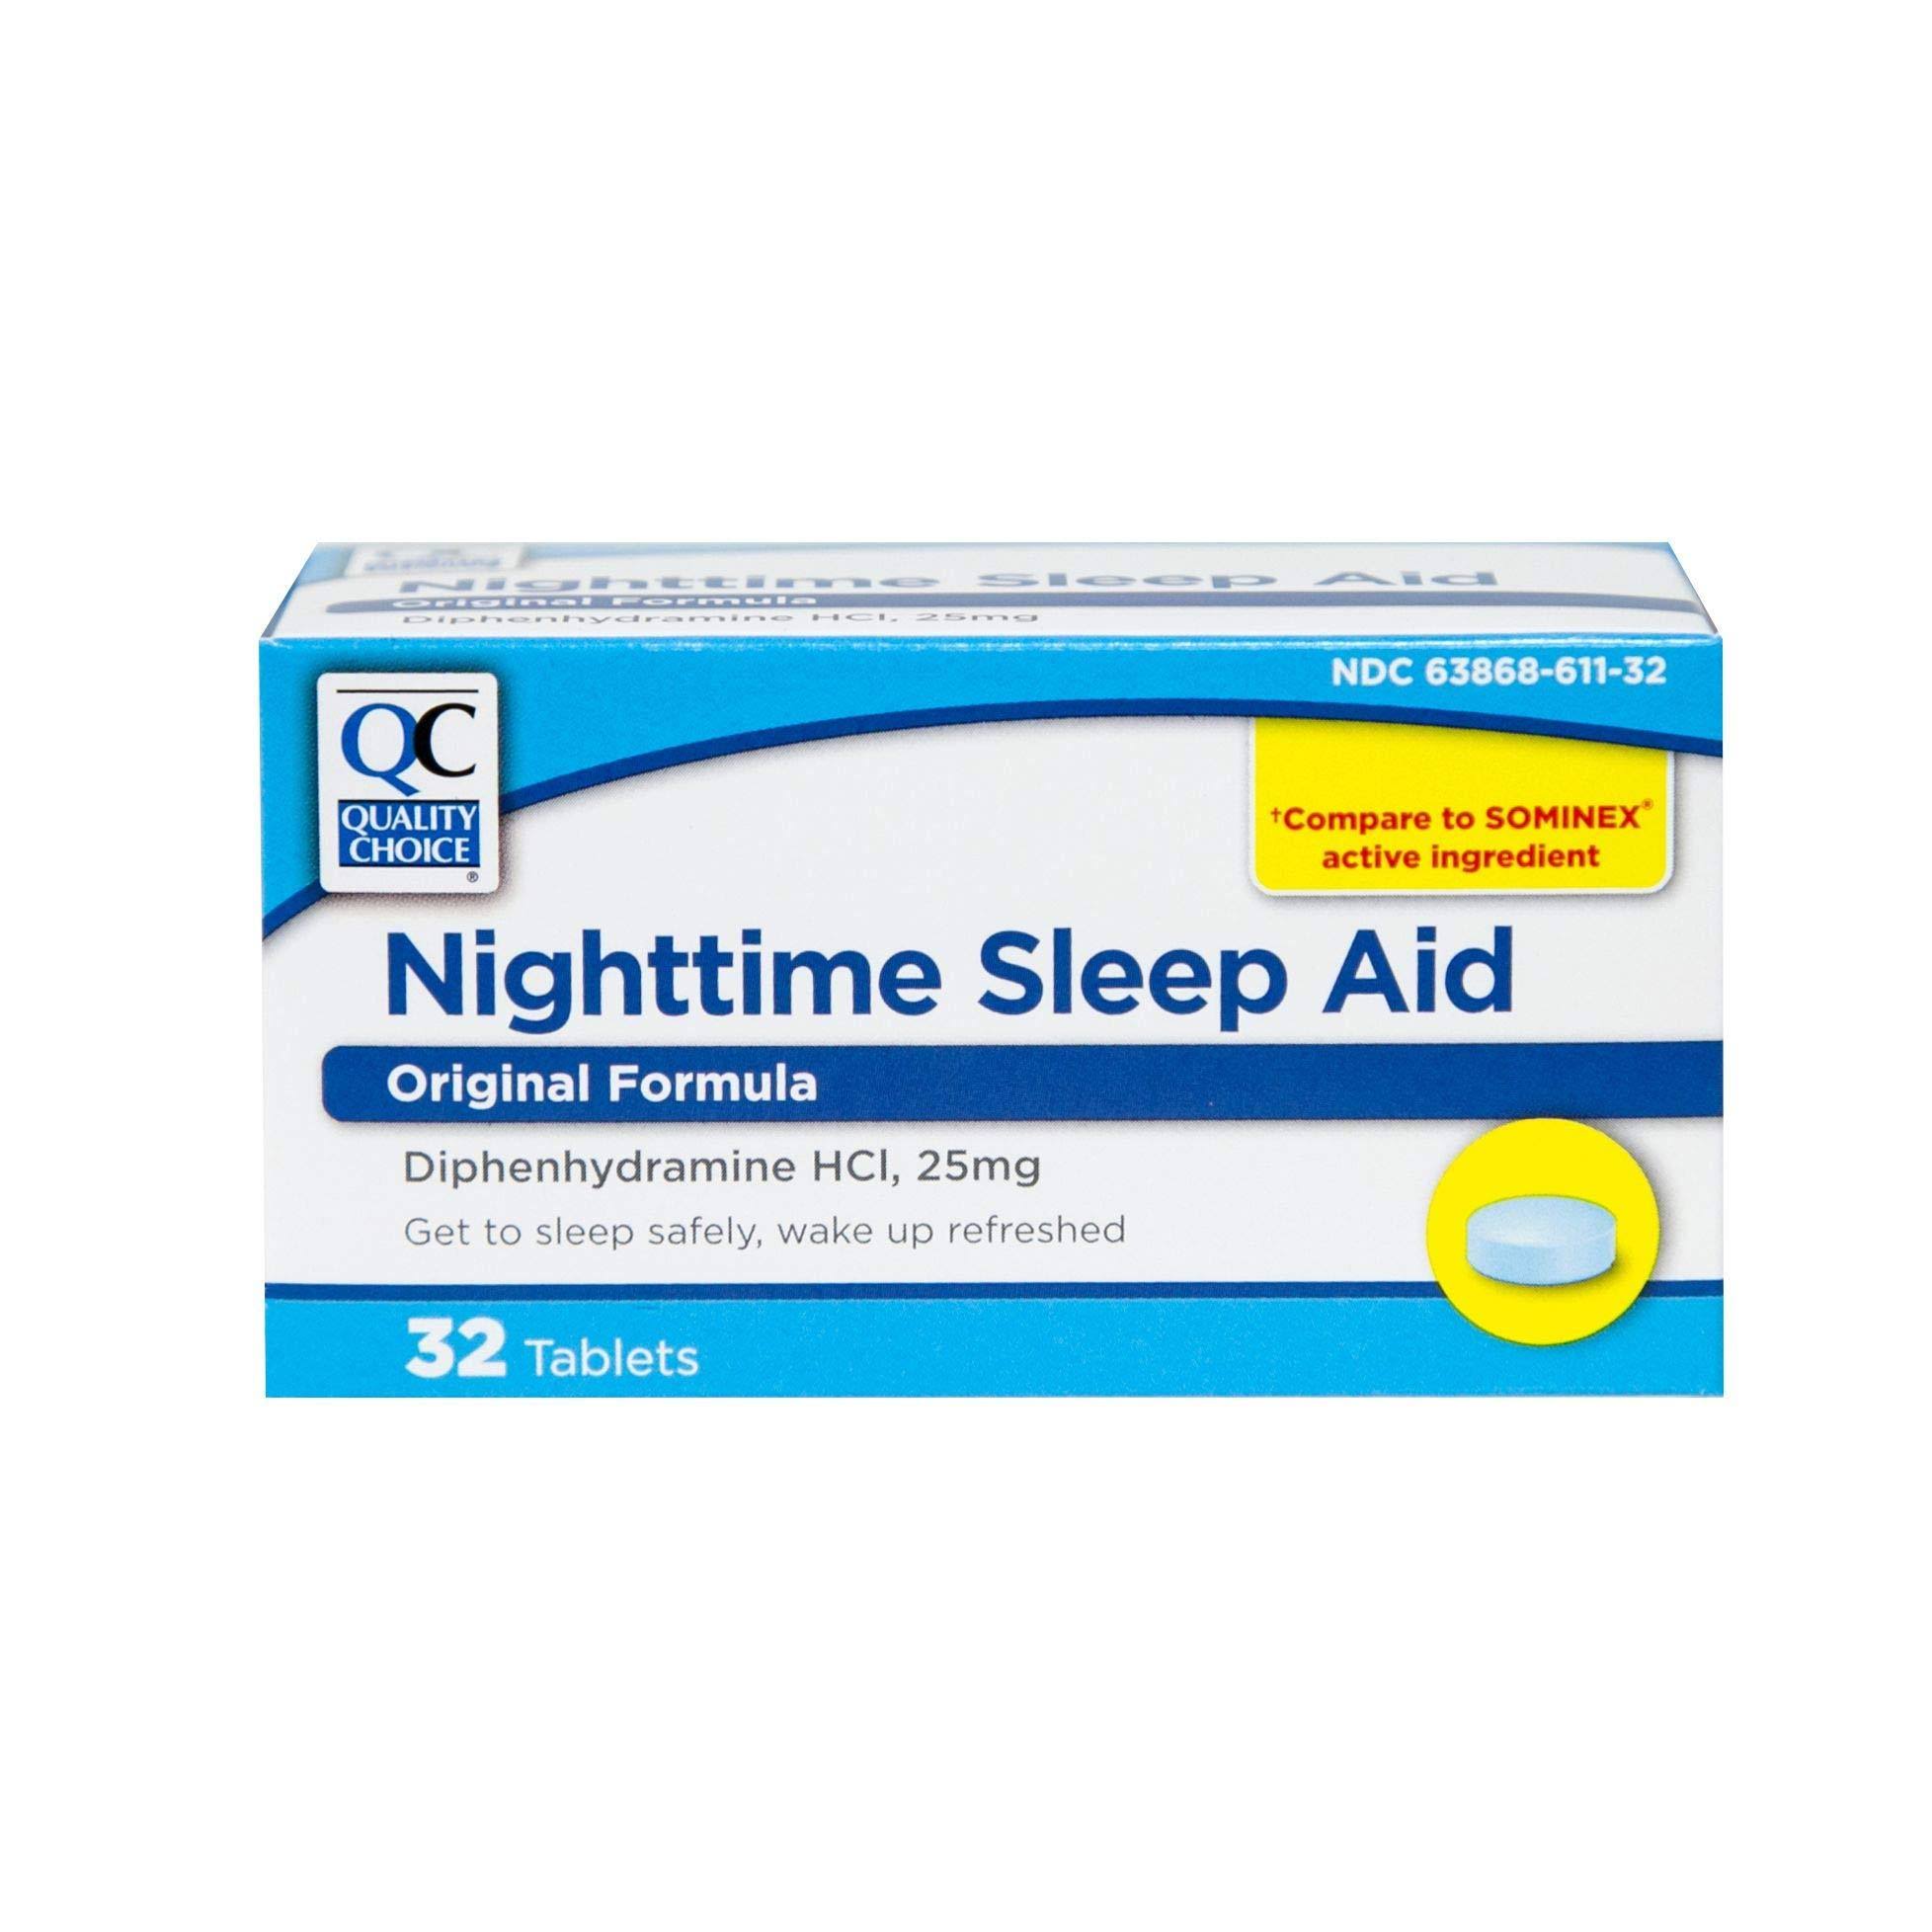 Quality Choice Night Time Sleep Aid Tablets